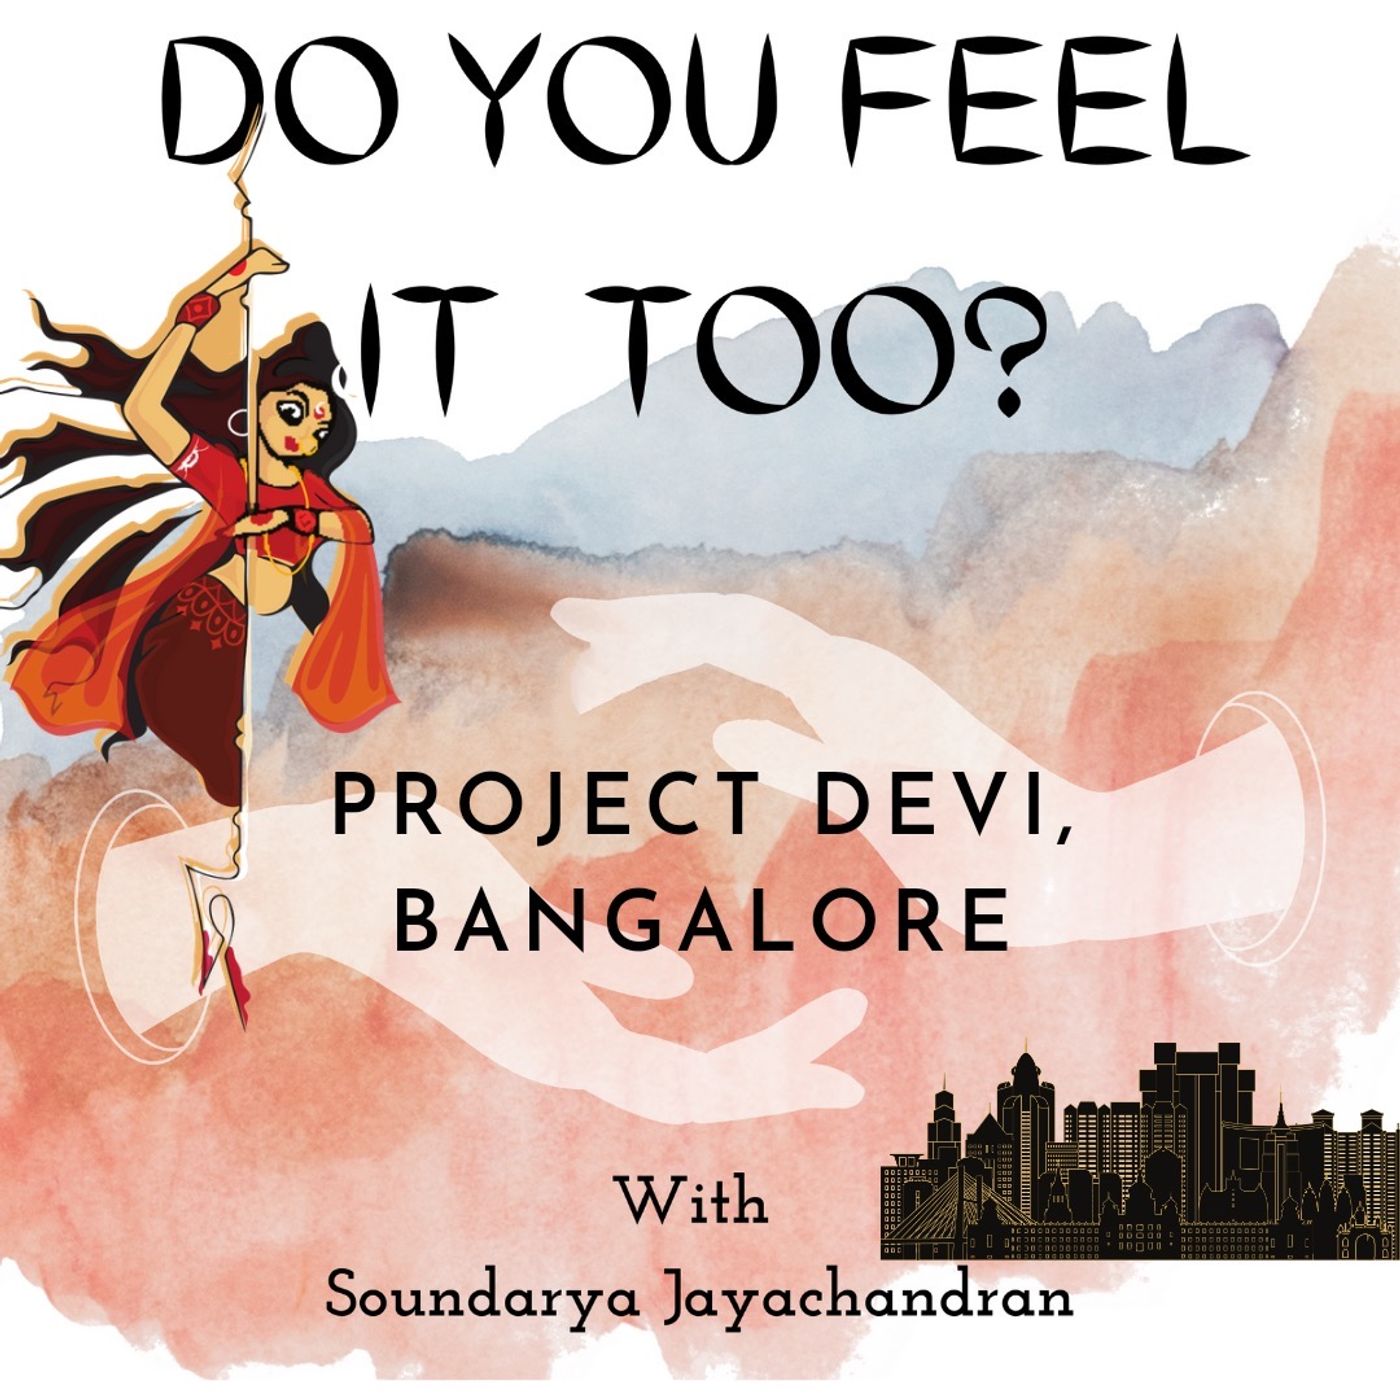 Project Devi, Bangalore